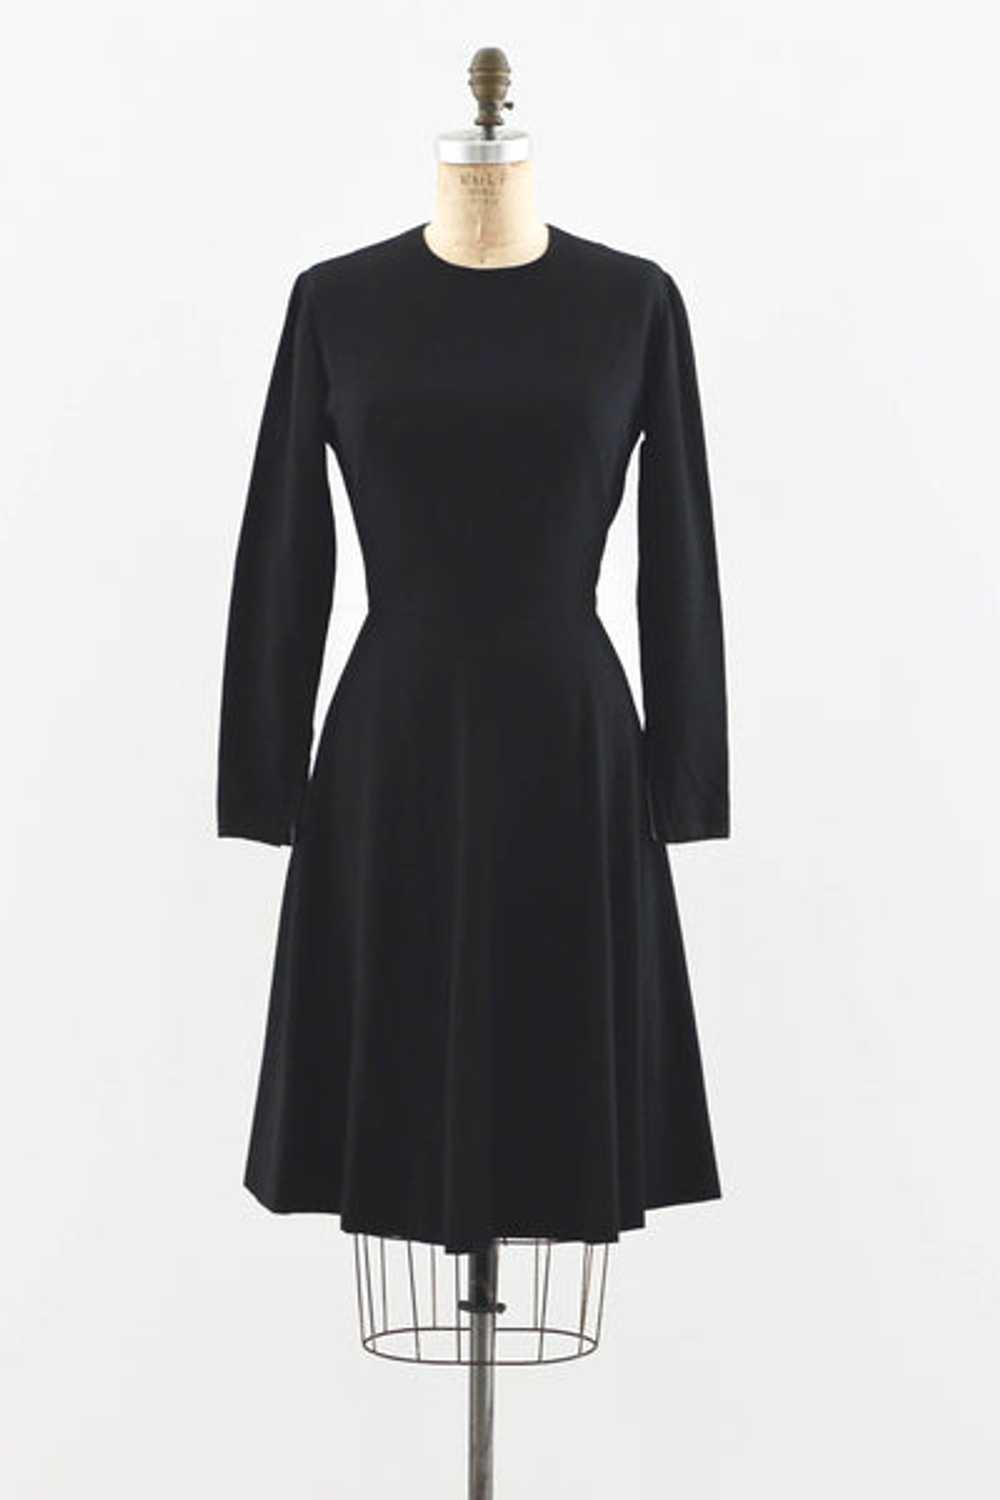 Neiman Marcus Wool Dress - image 1